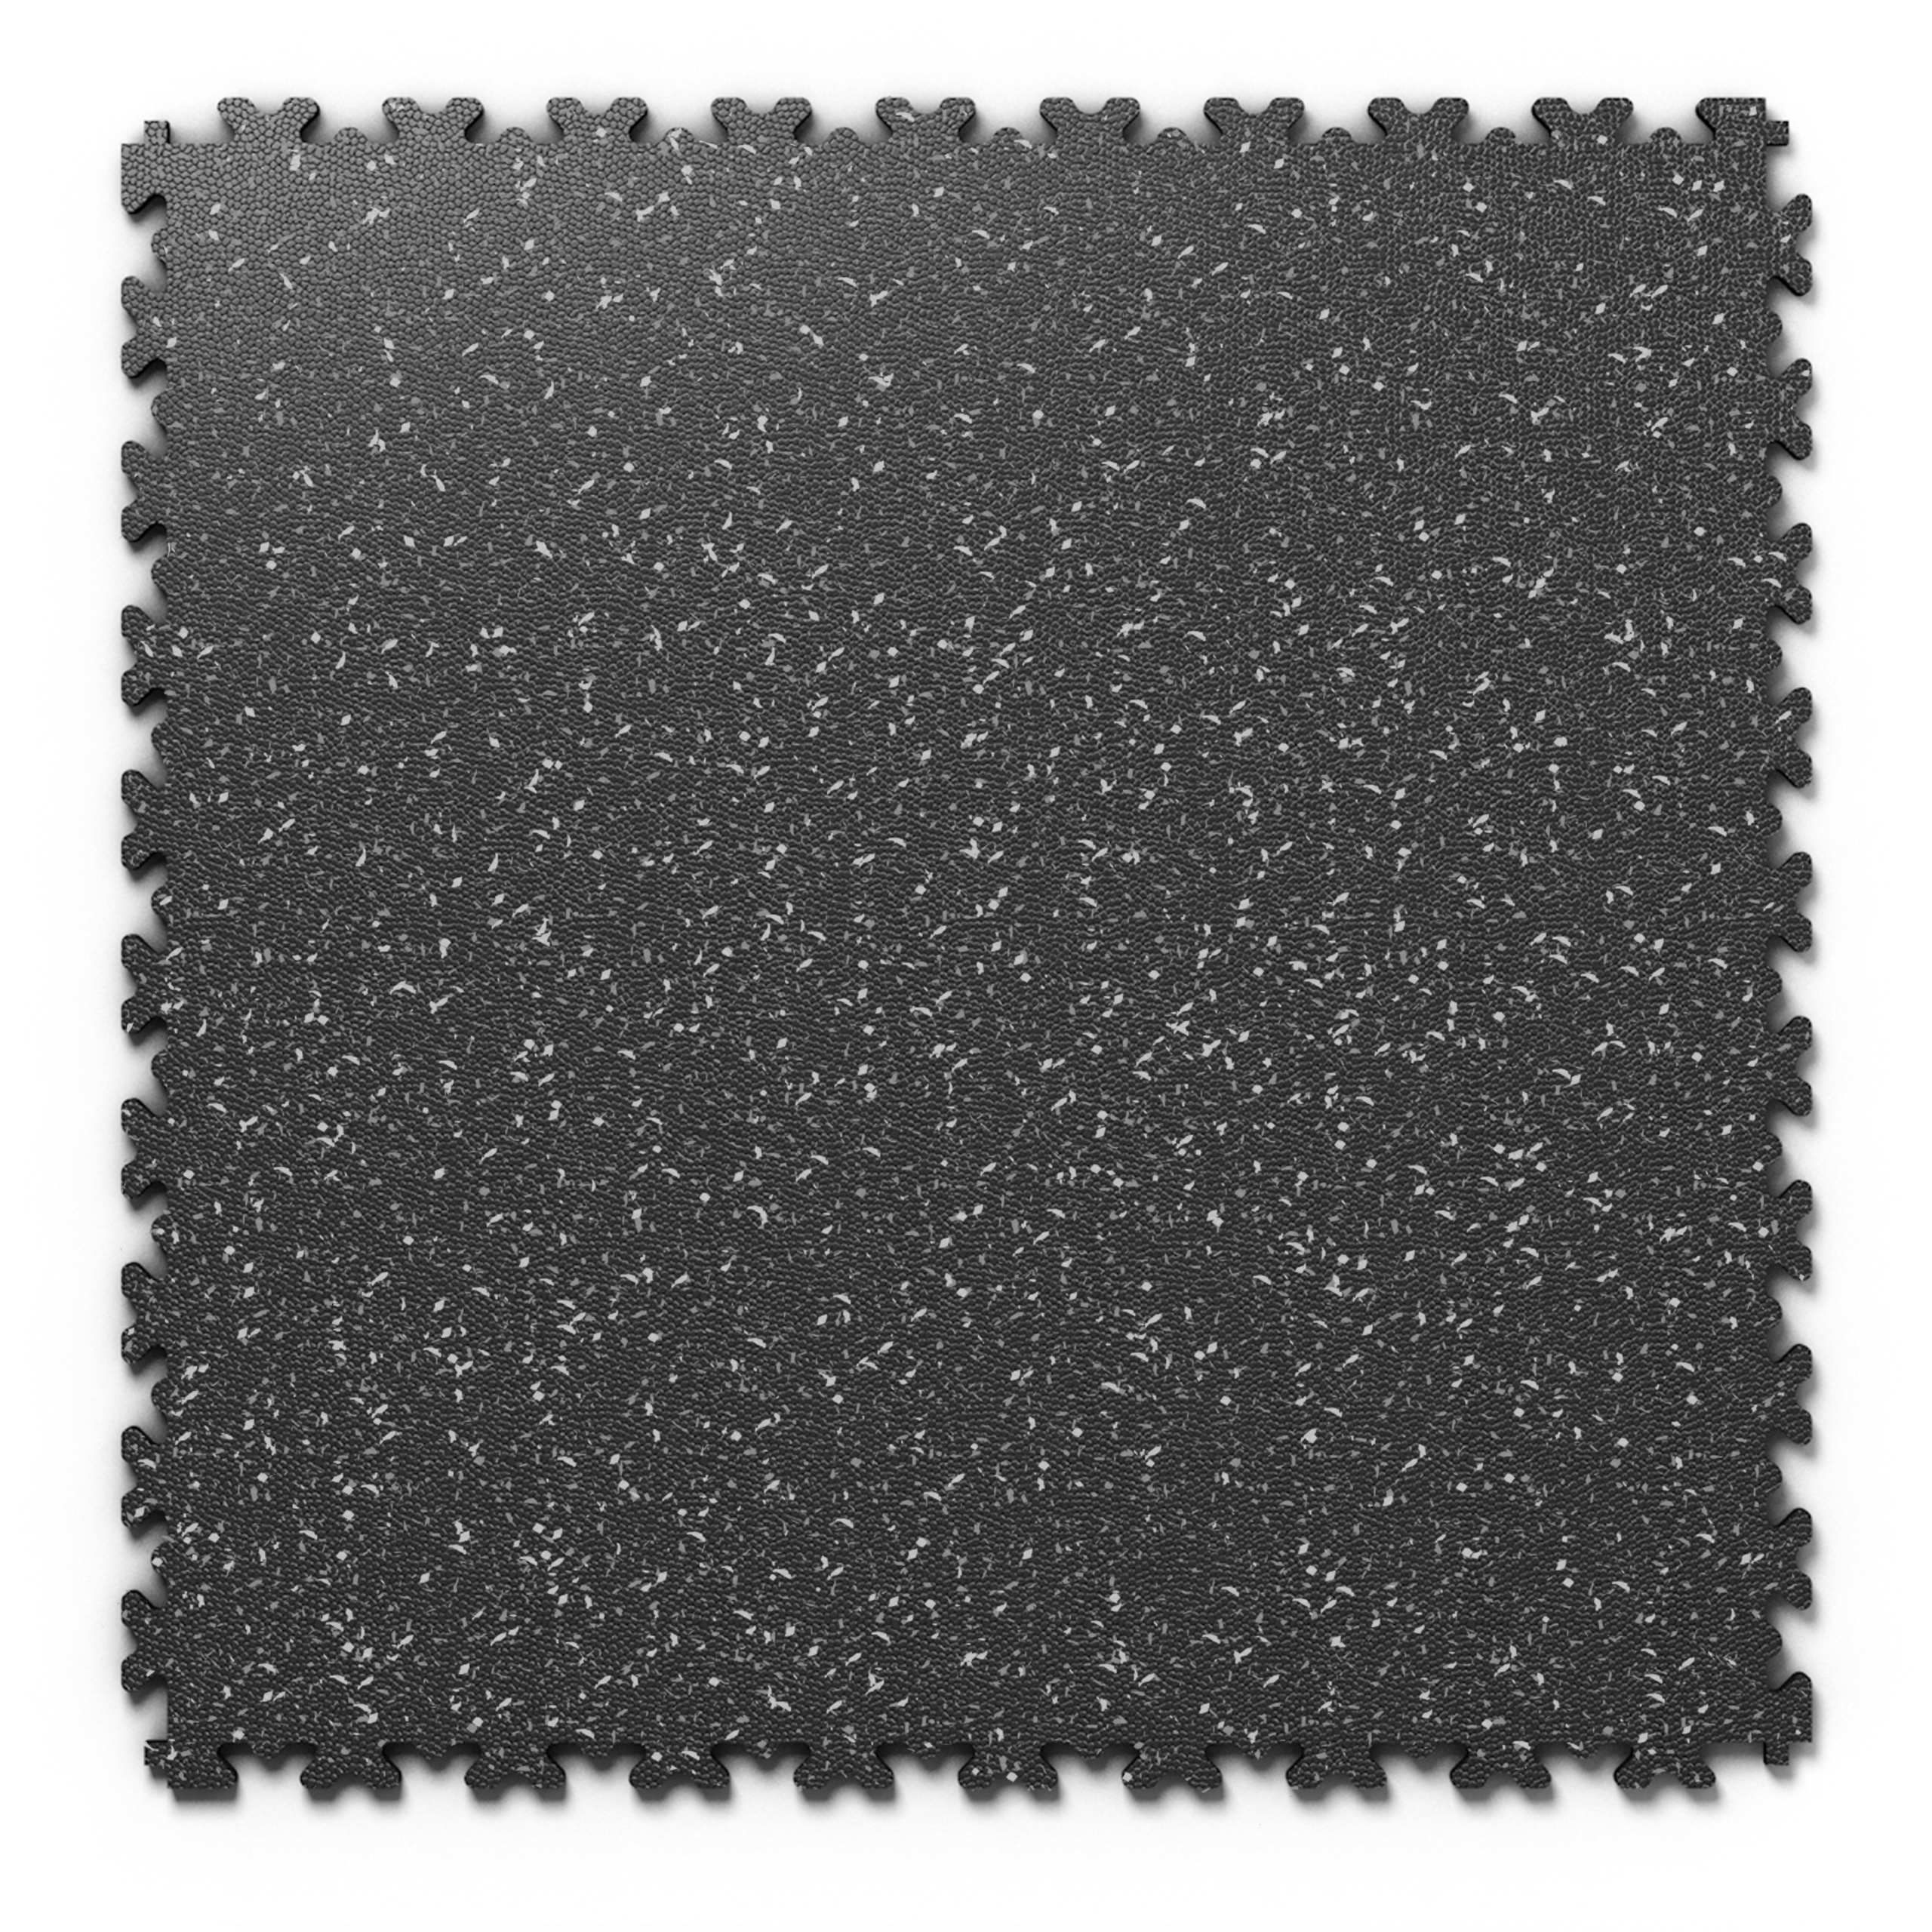 Granit Black 01 tile